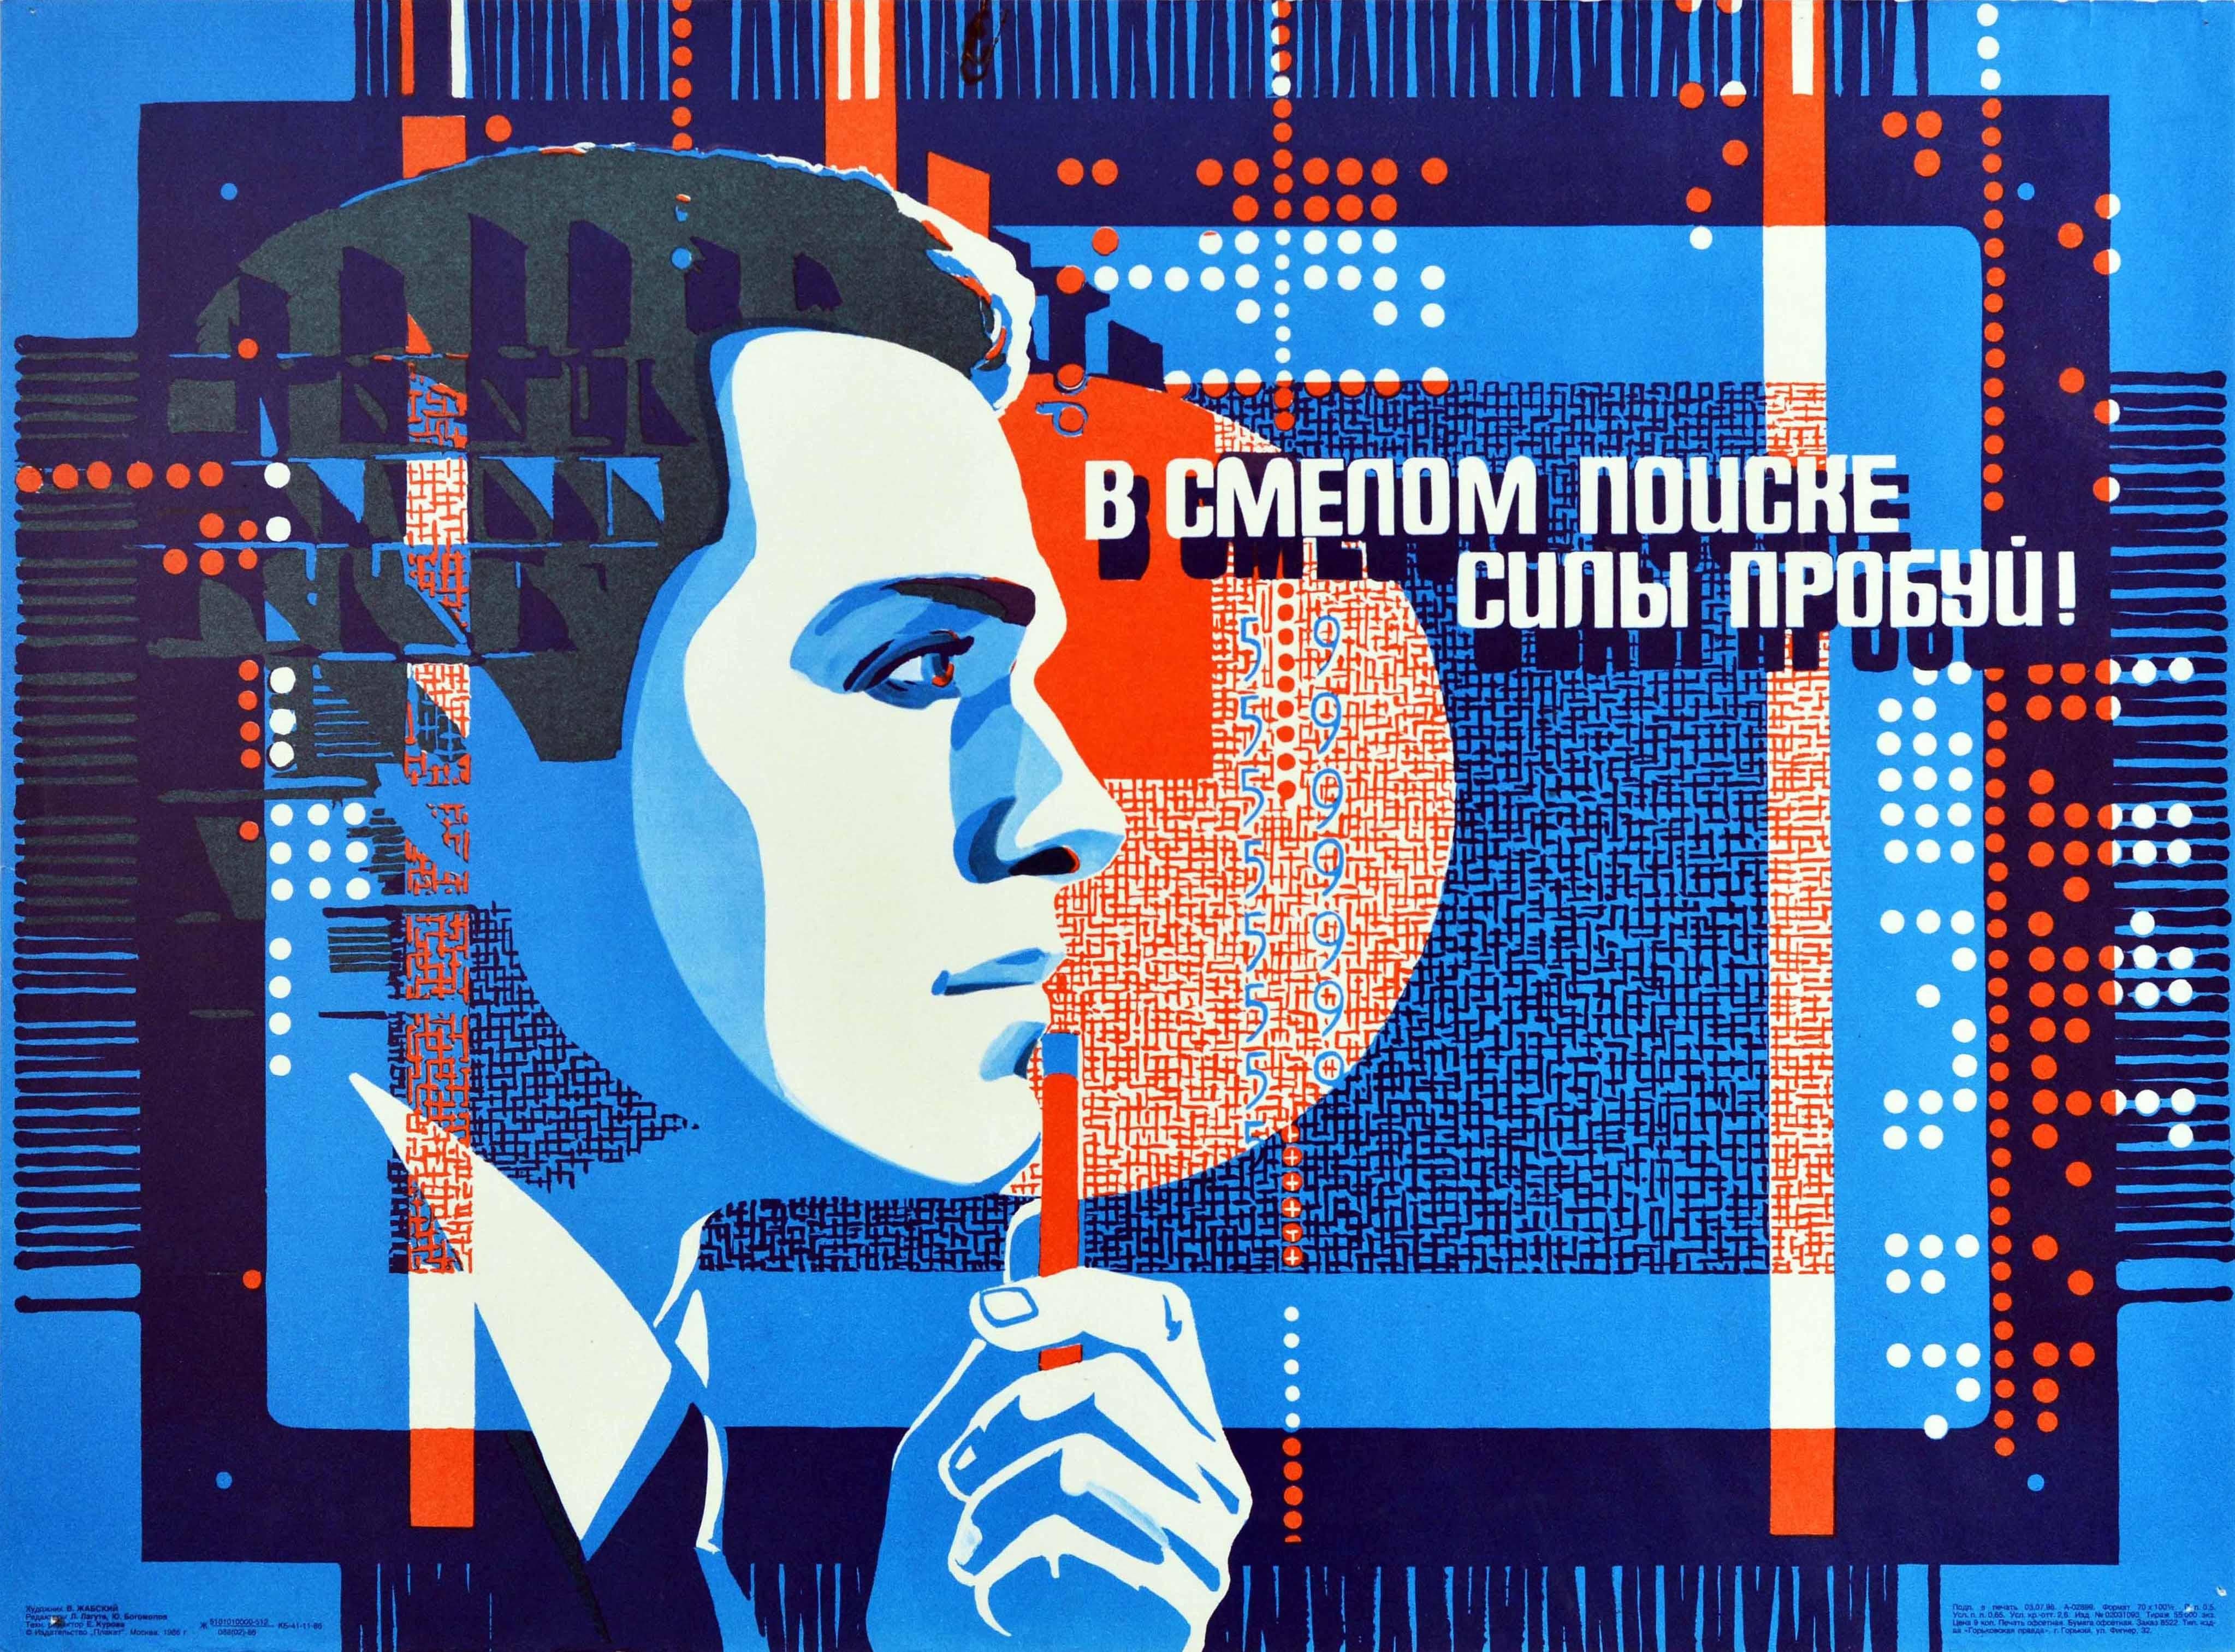 V Zhabskiy Print - Original Vintage Poster Computer Science Engineer IT Creativity USSR Exploration